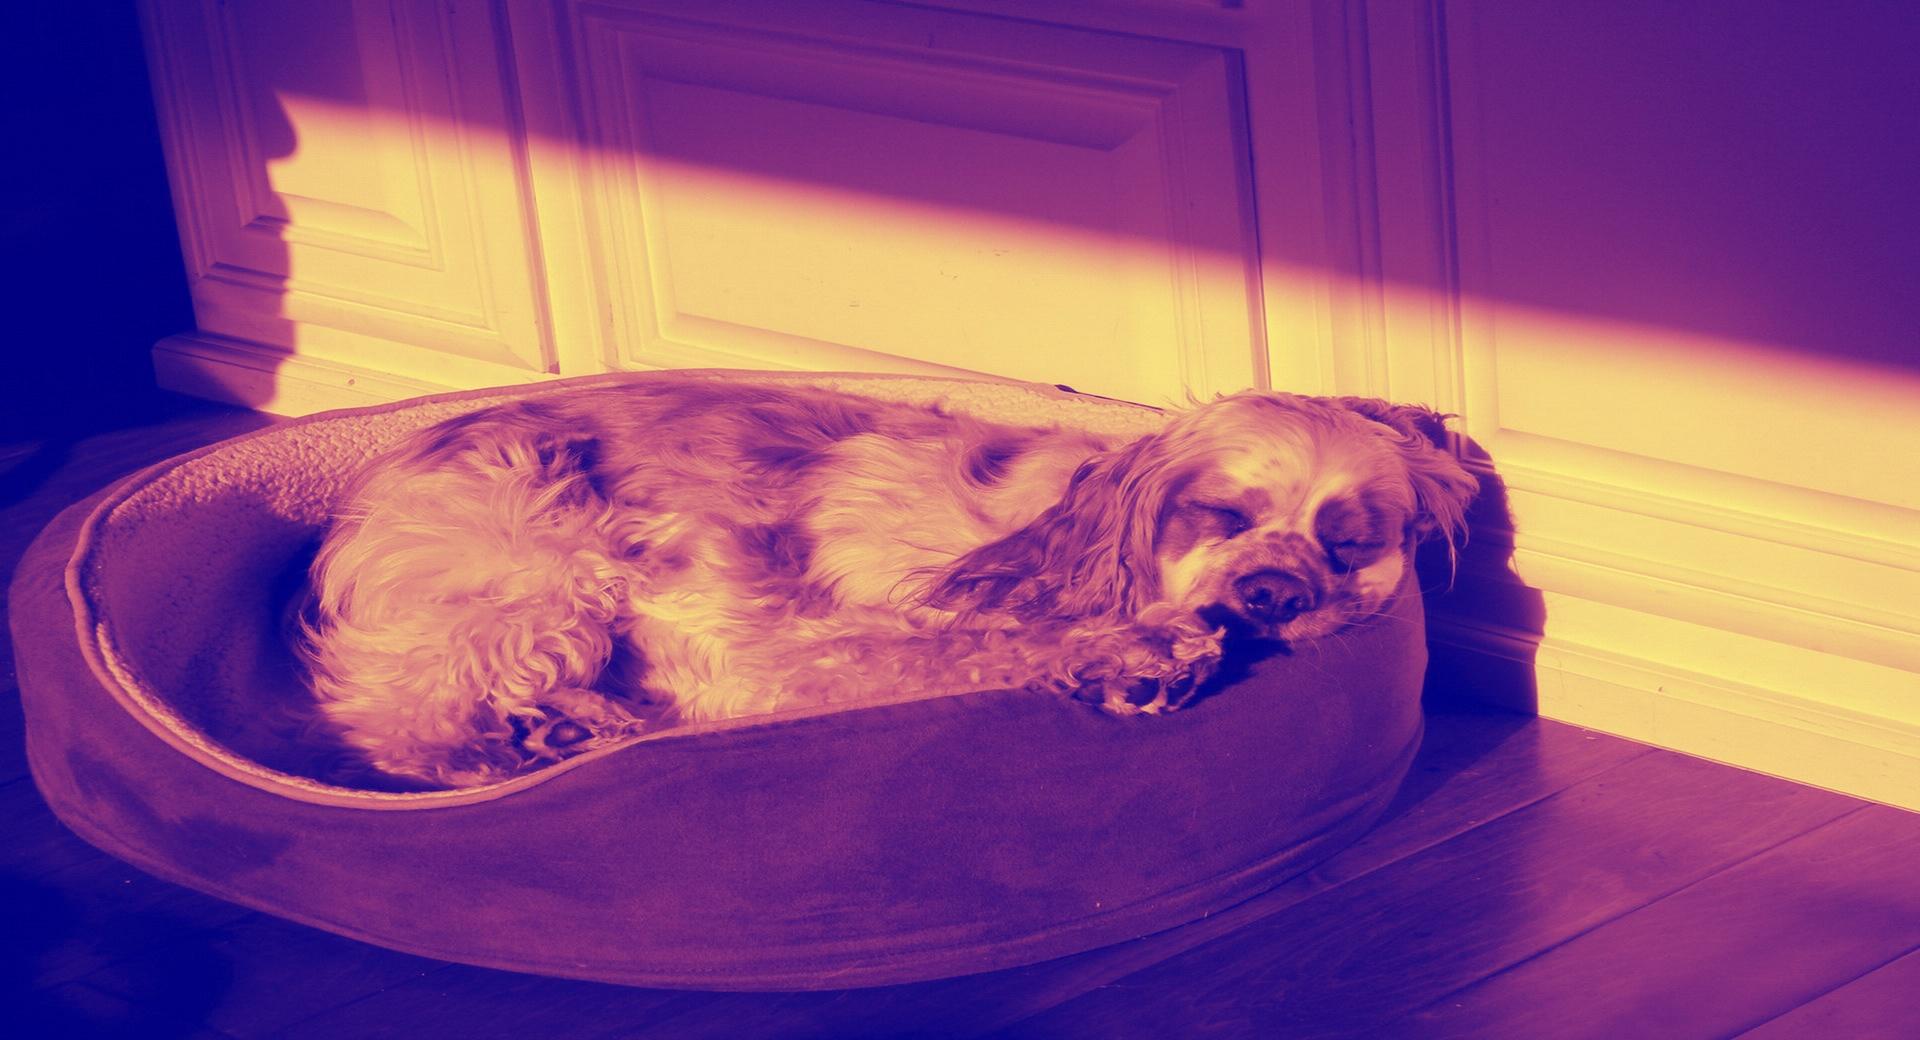 Sleeping Dog - Amber at 1024 x 1024 iPad size wallpapers HD quality